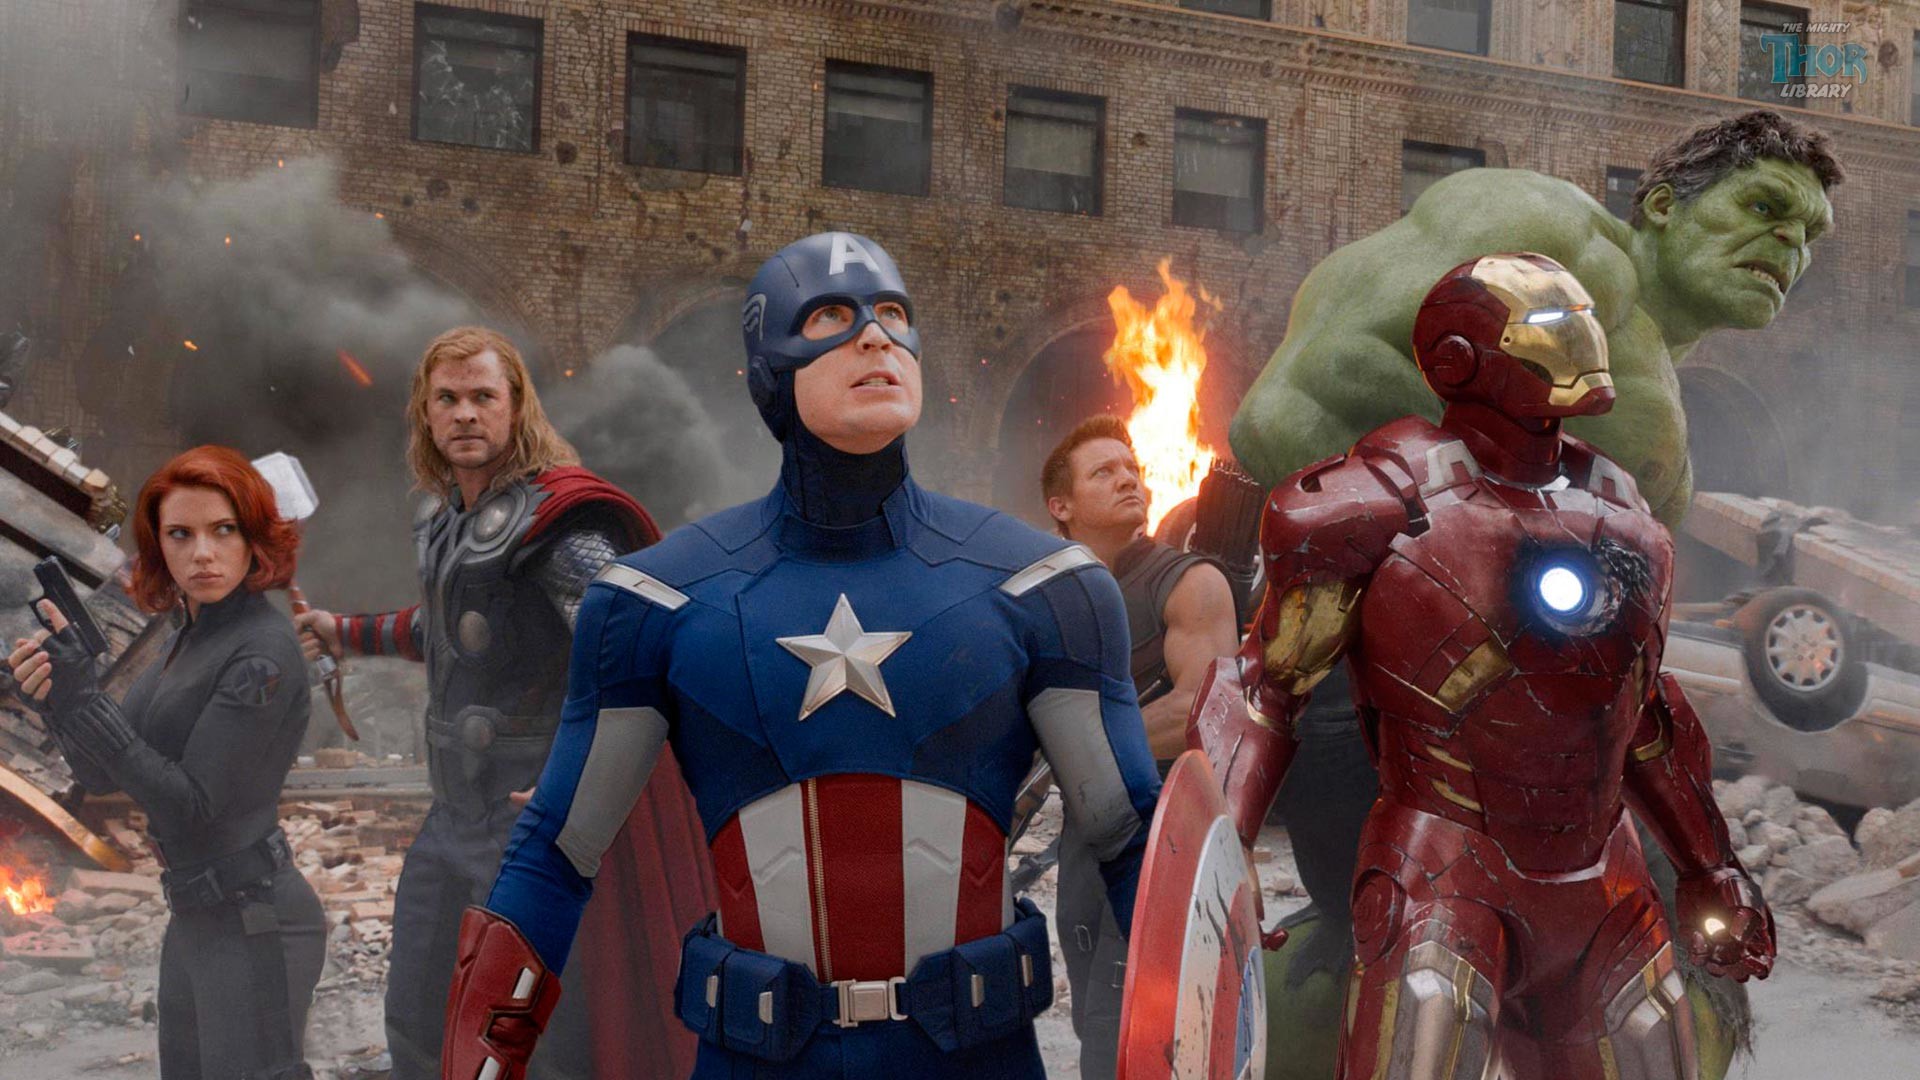 Avengers Assemble in Movie 1920 x 1080 wallpaper